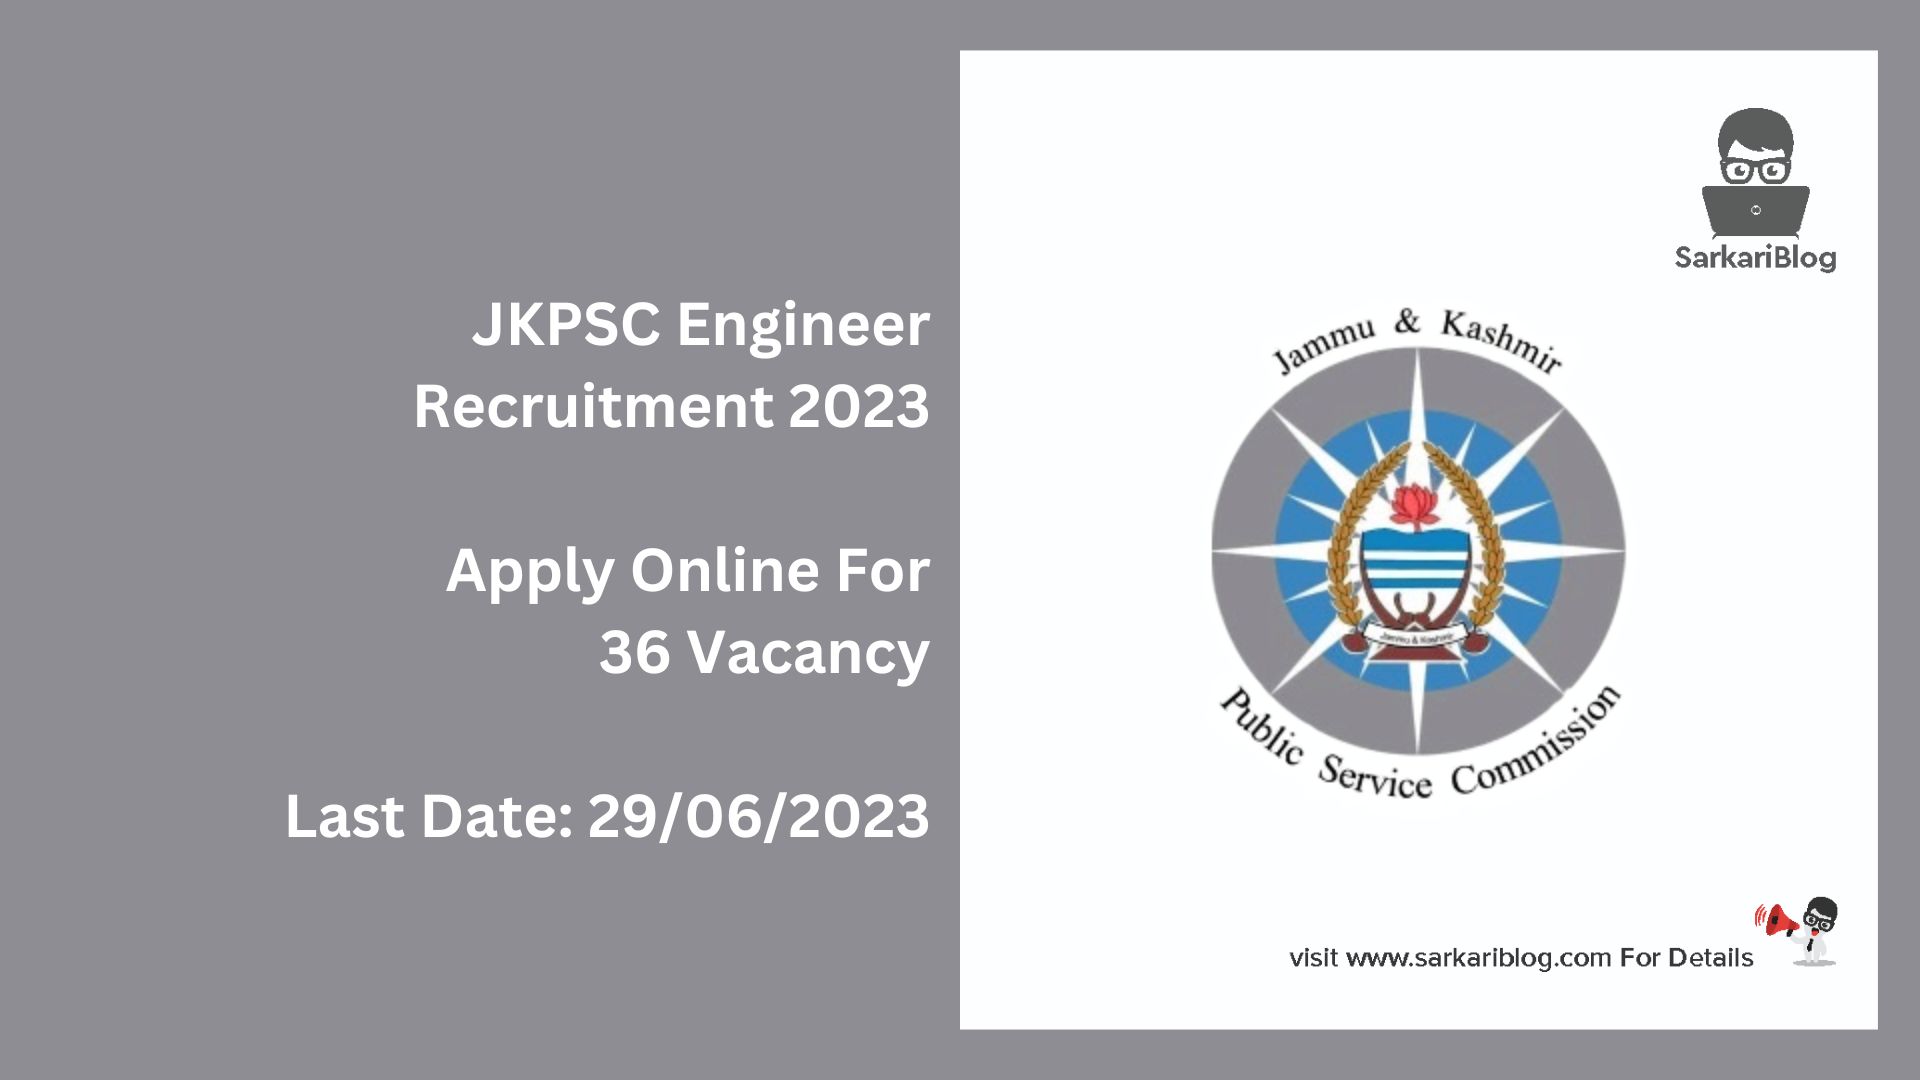 JKPSC Engineer Recruitment 2023